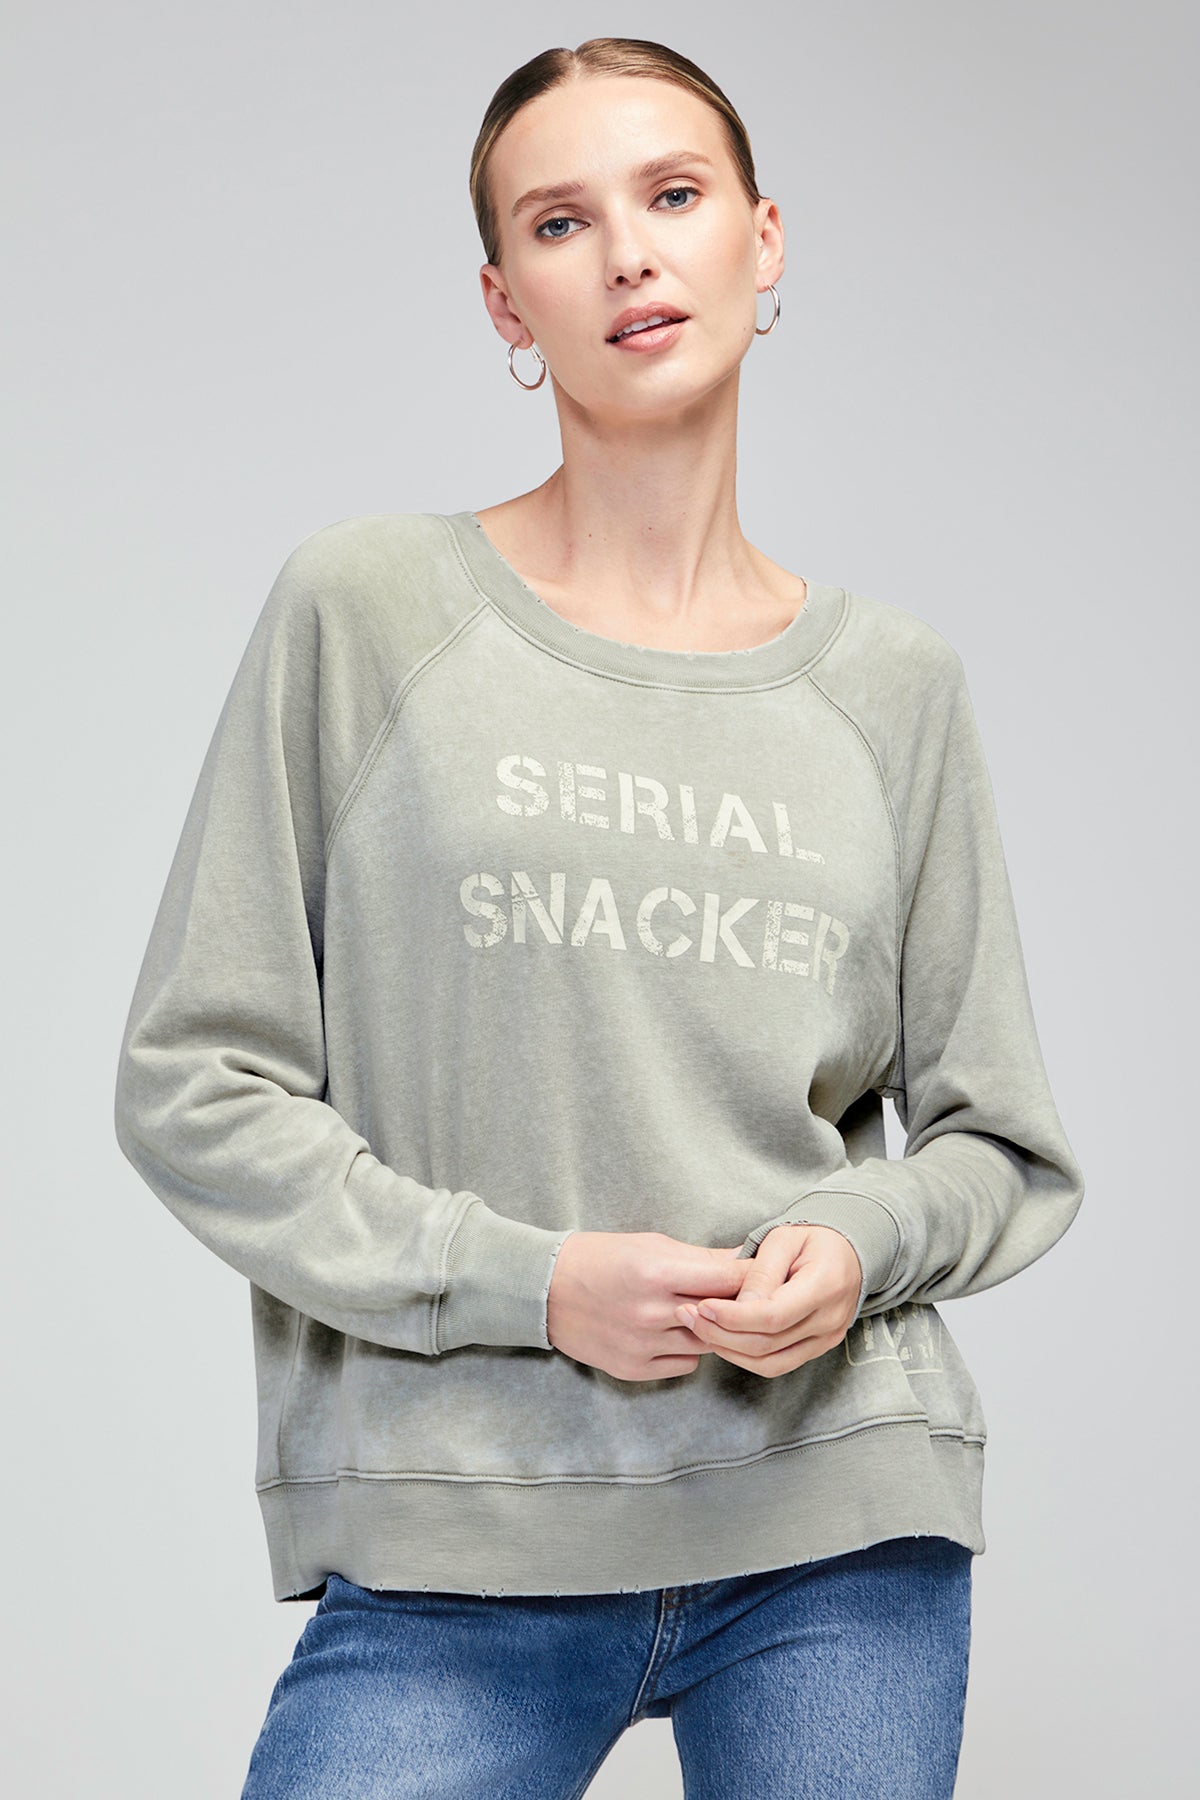 Serial Snacker Sommers Sweatshirt | Seagrass